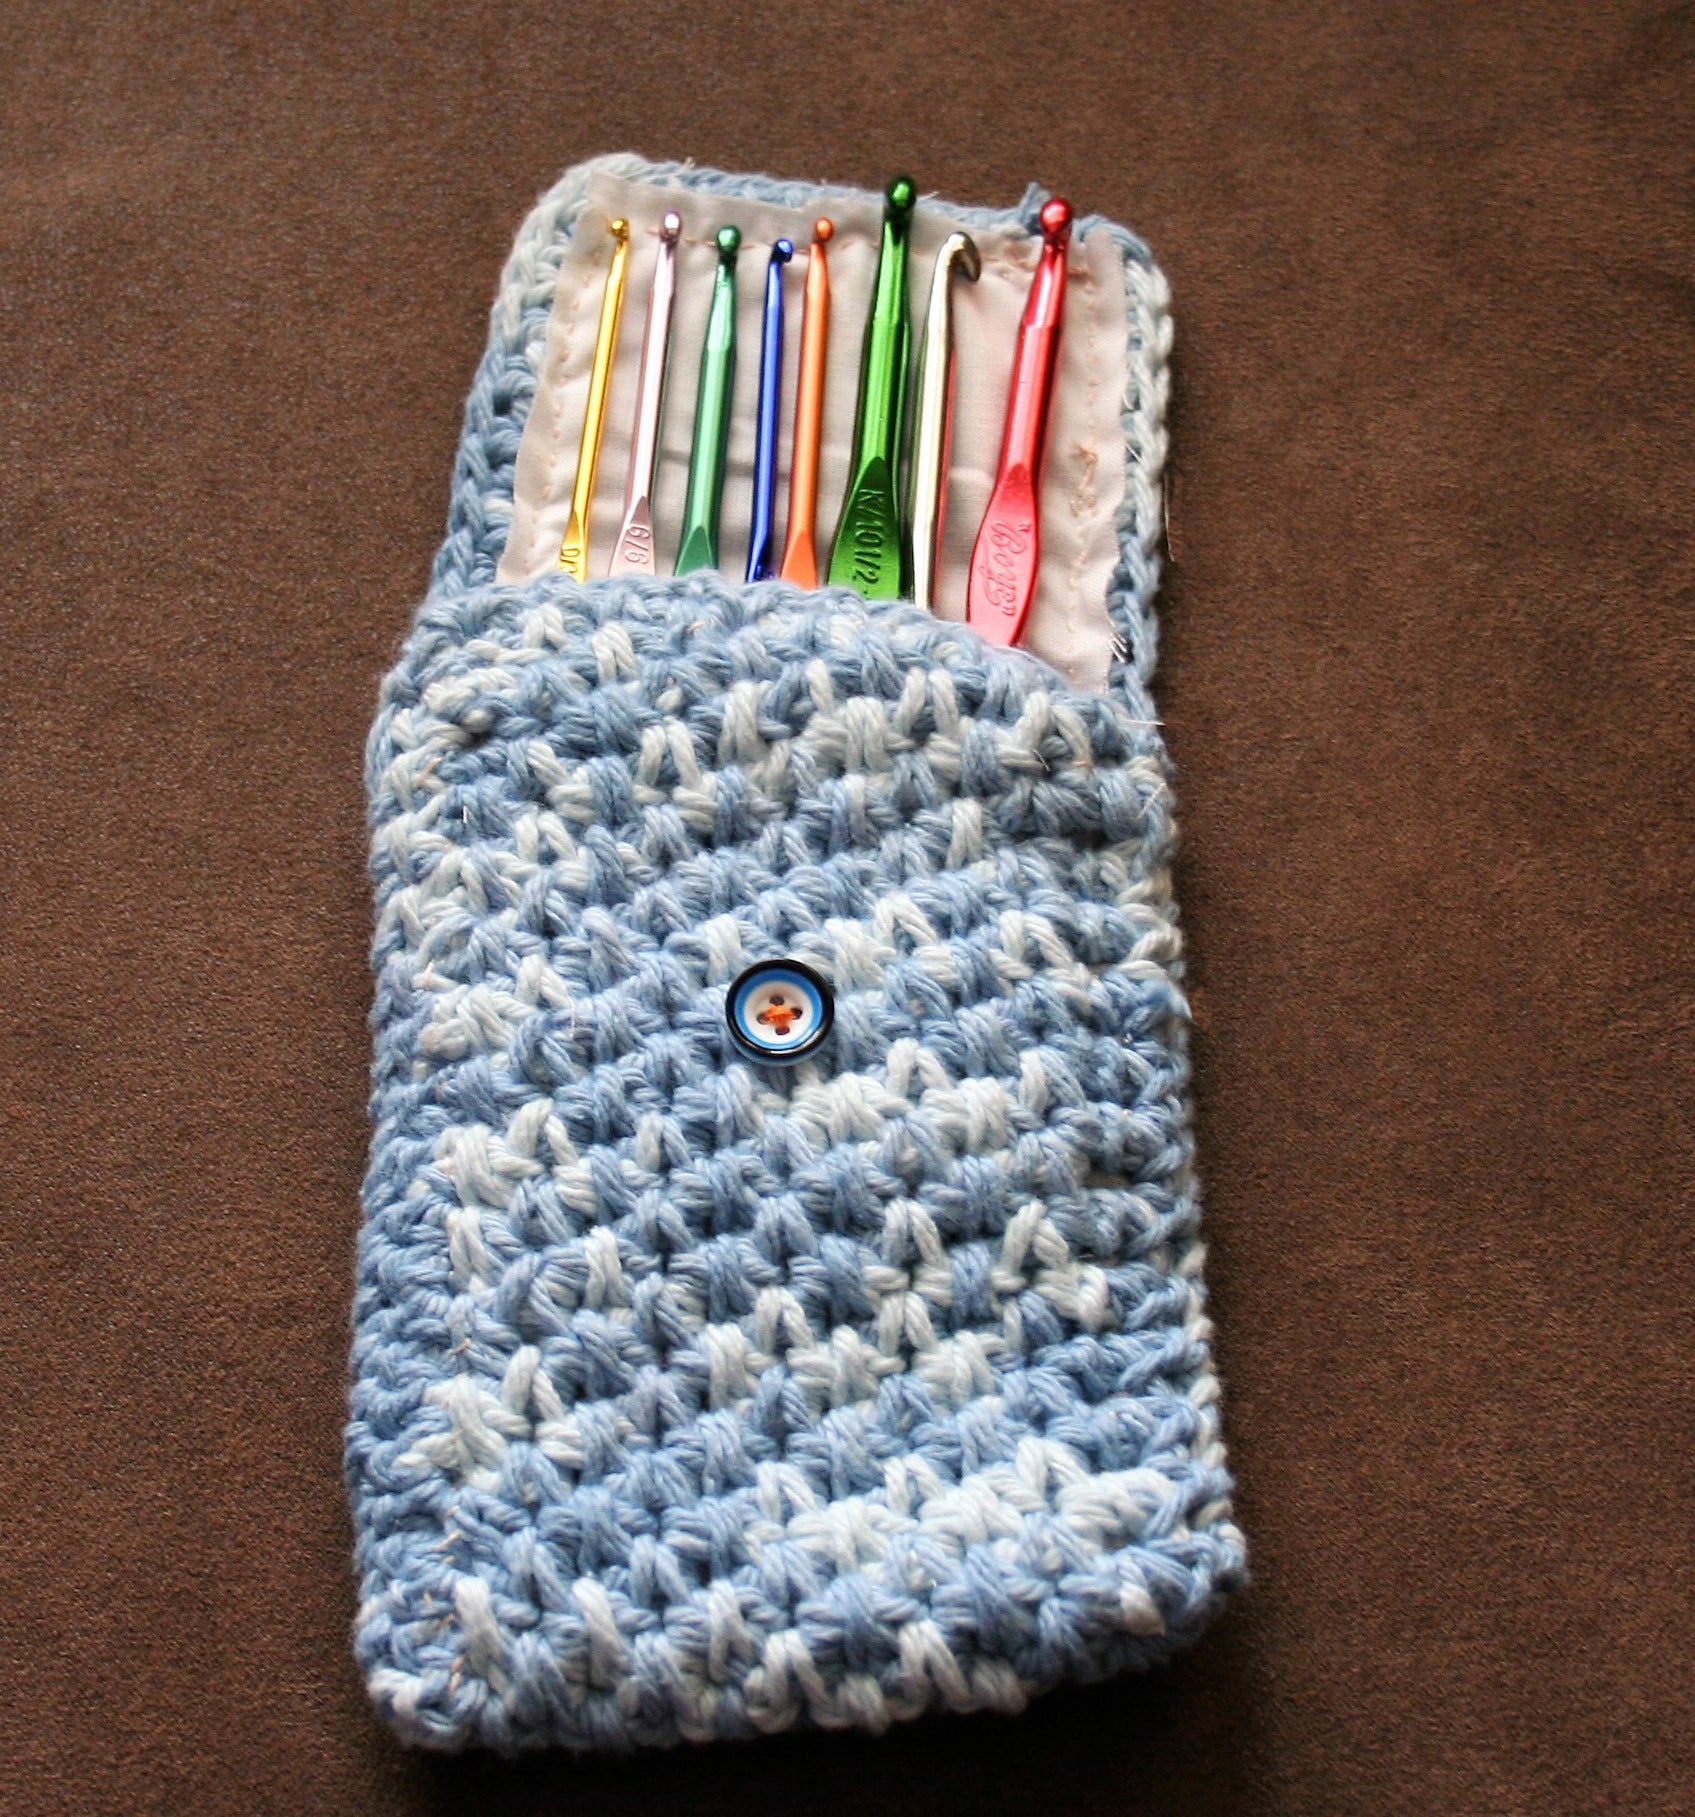 Crochet Hook Set for Sale